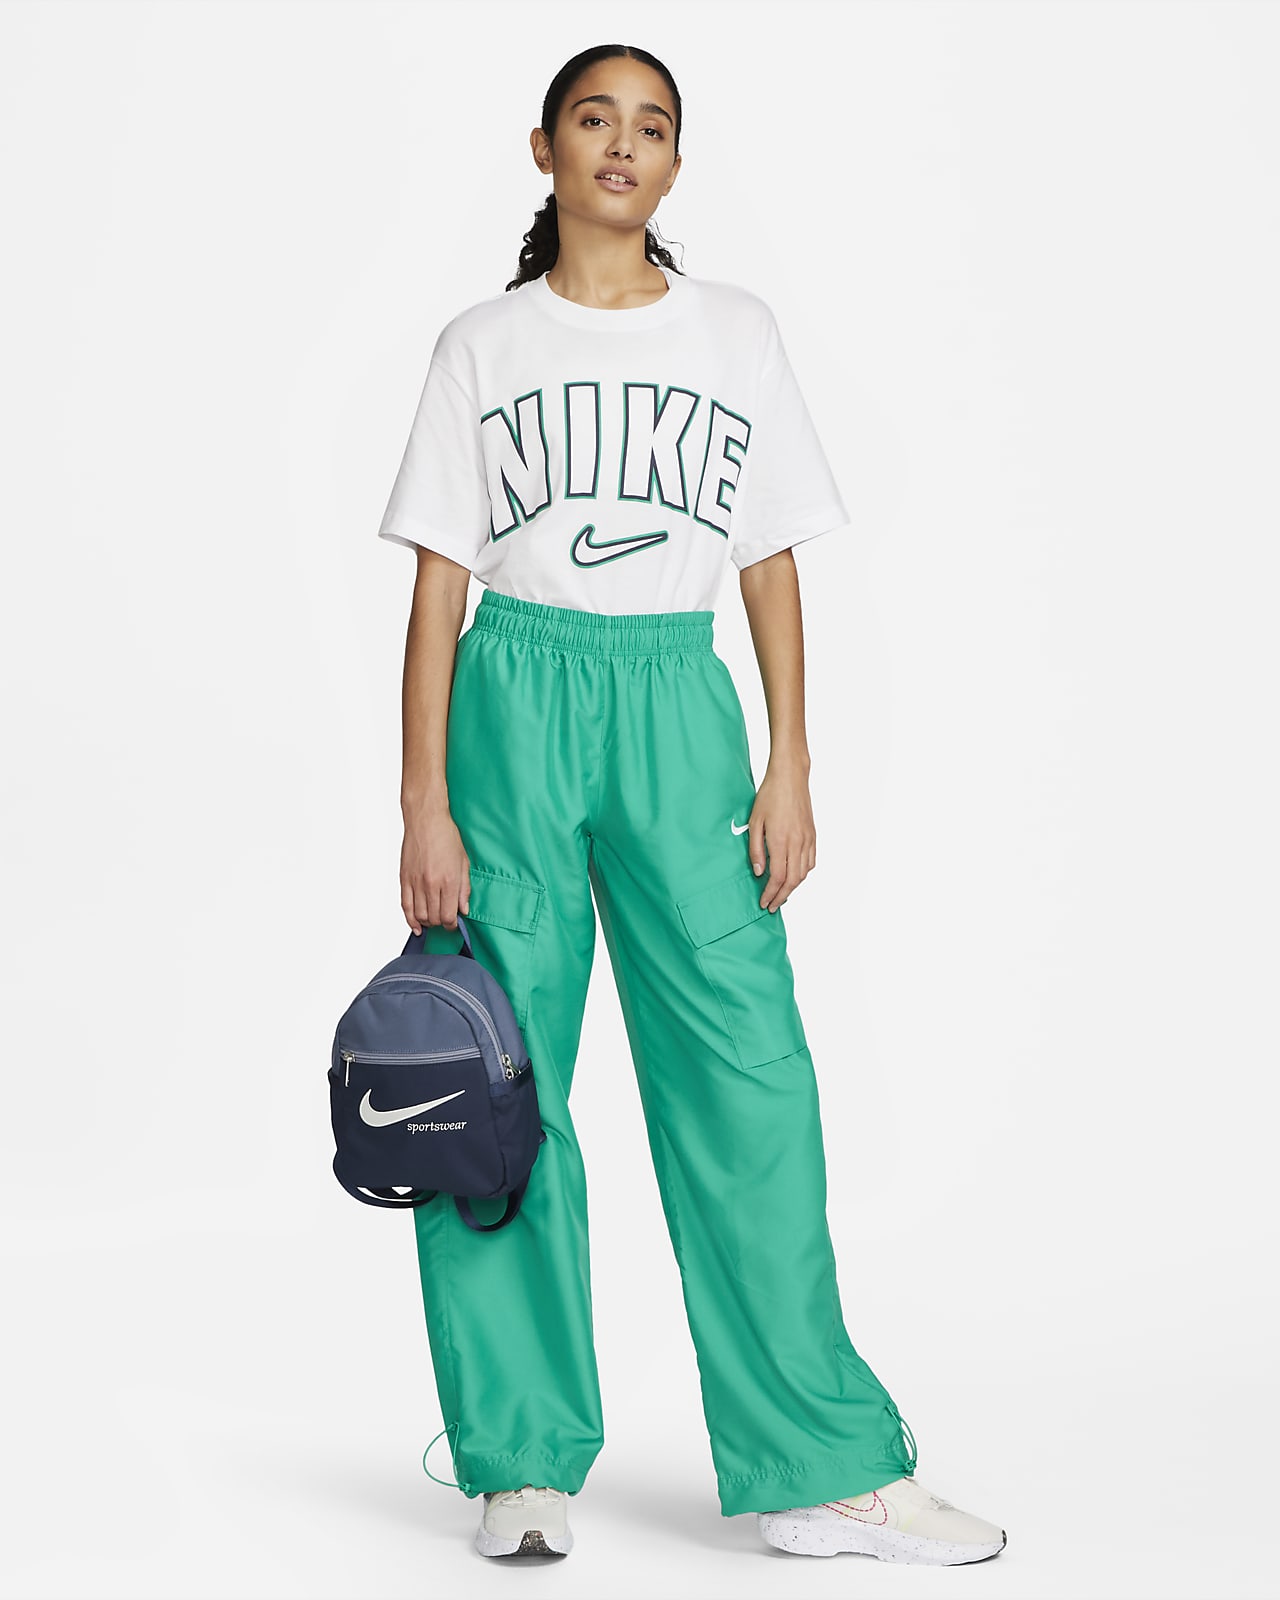 Shop Nike Futura 365 Crossbody Bag online